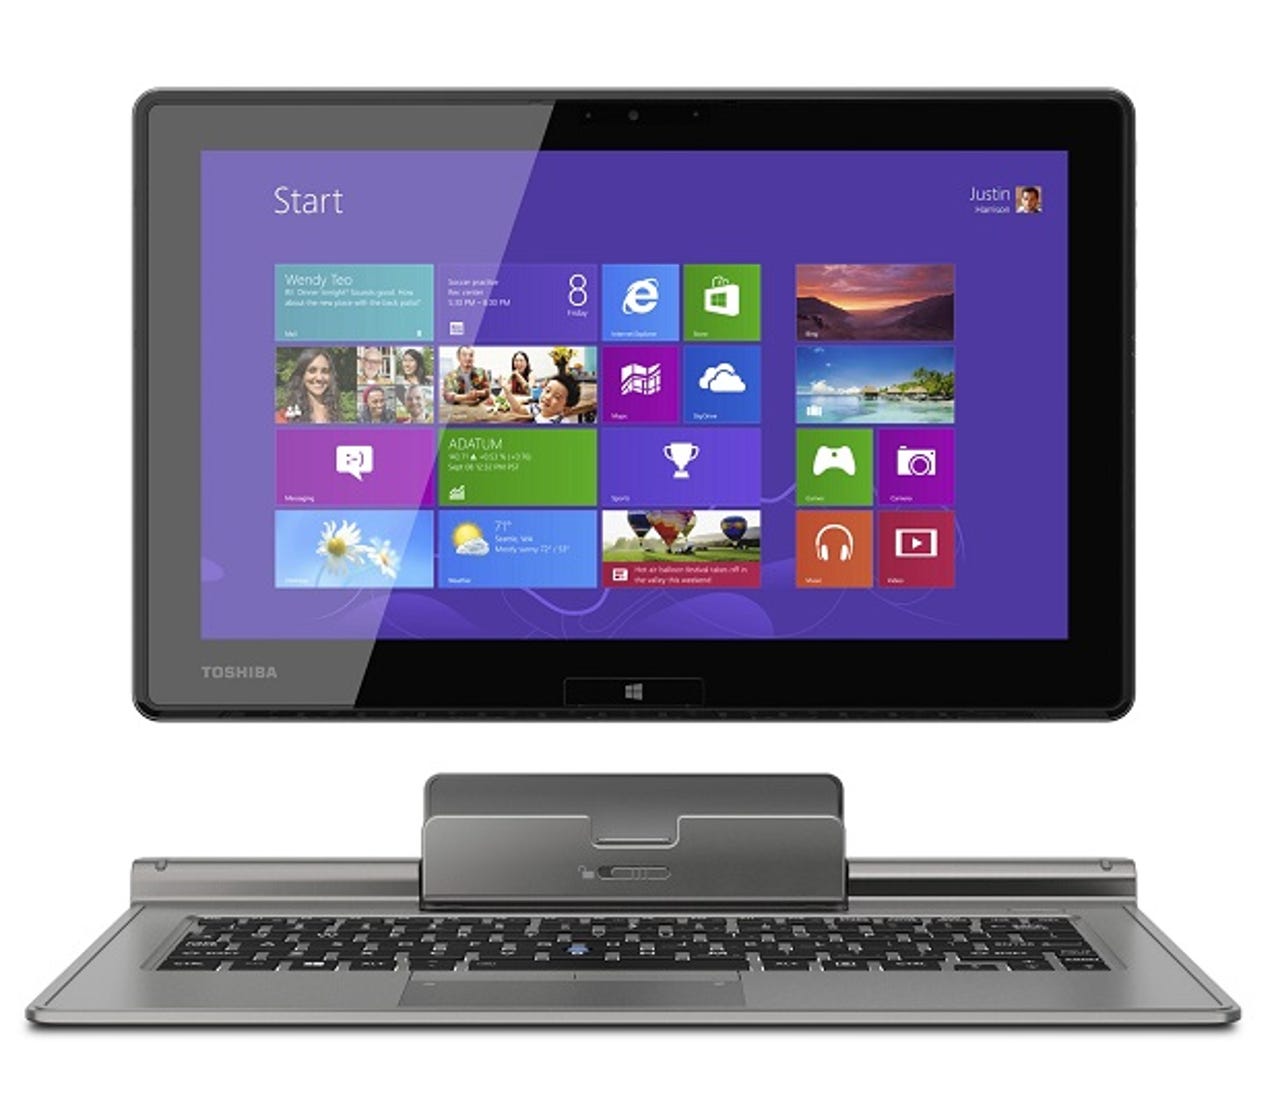 toshiba-portege-Z10t-windows-8-ultrabook-laptop-notebook